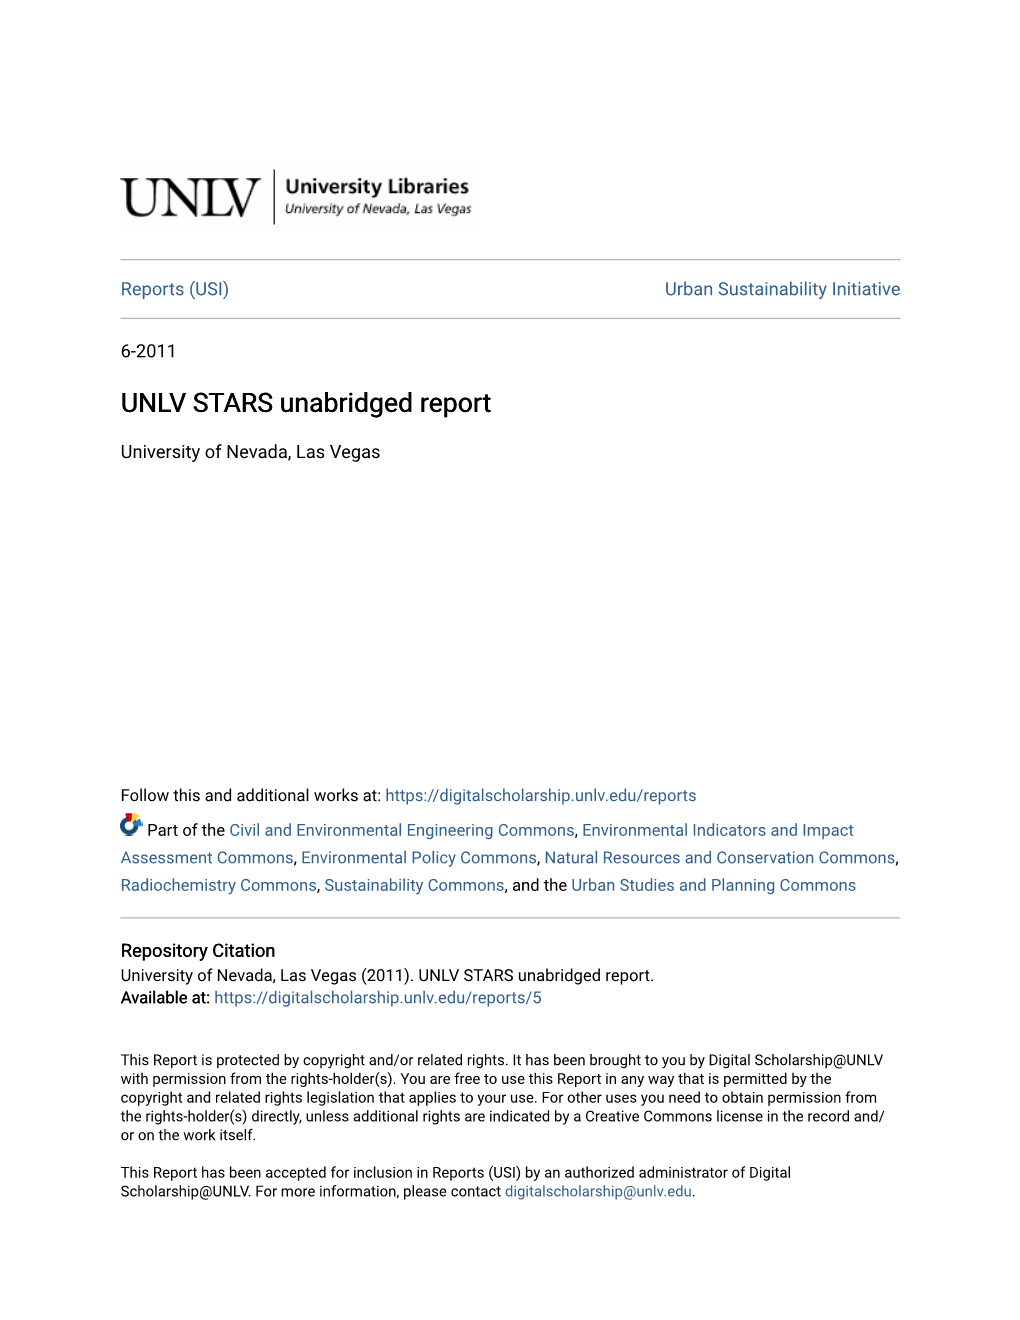 UNLV STARS Unabridged Report